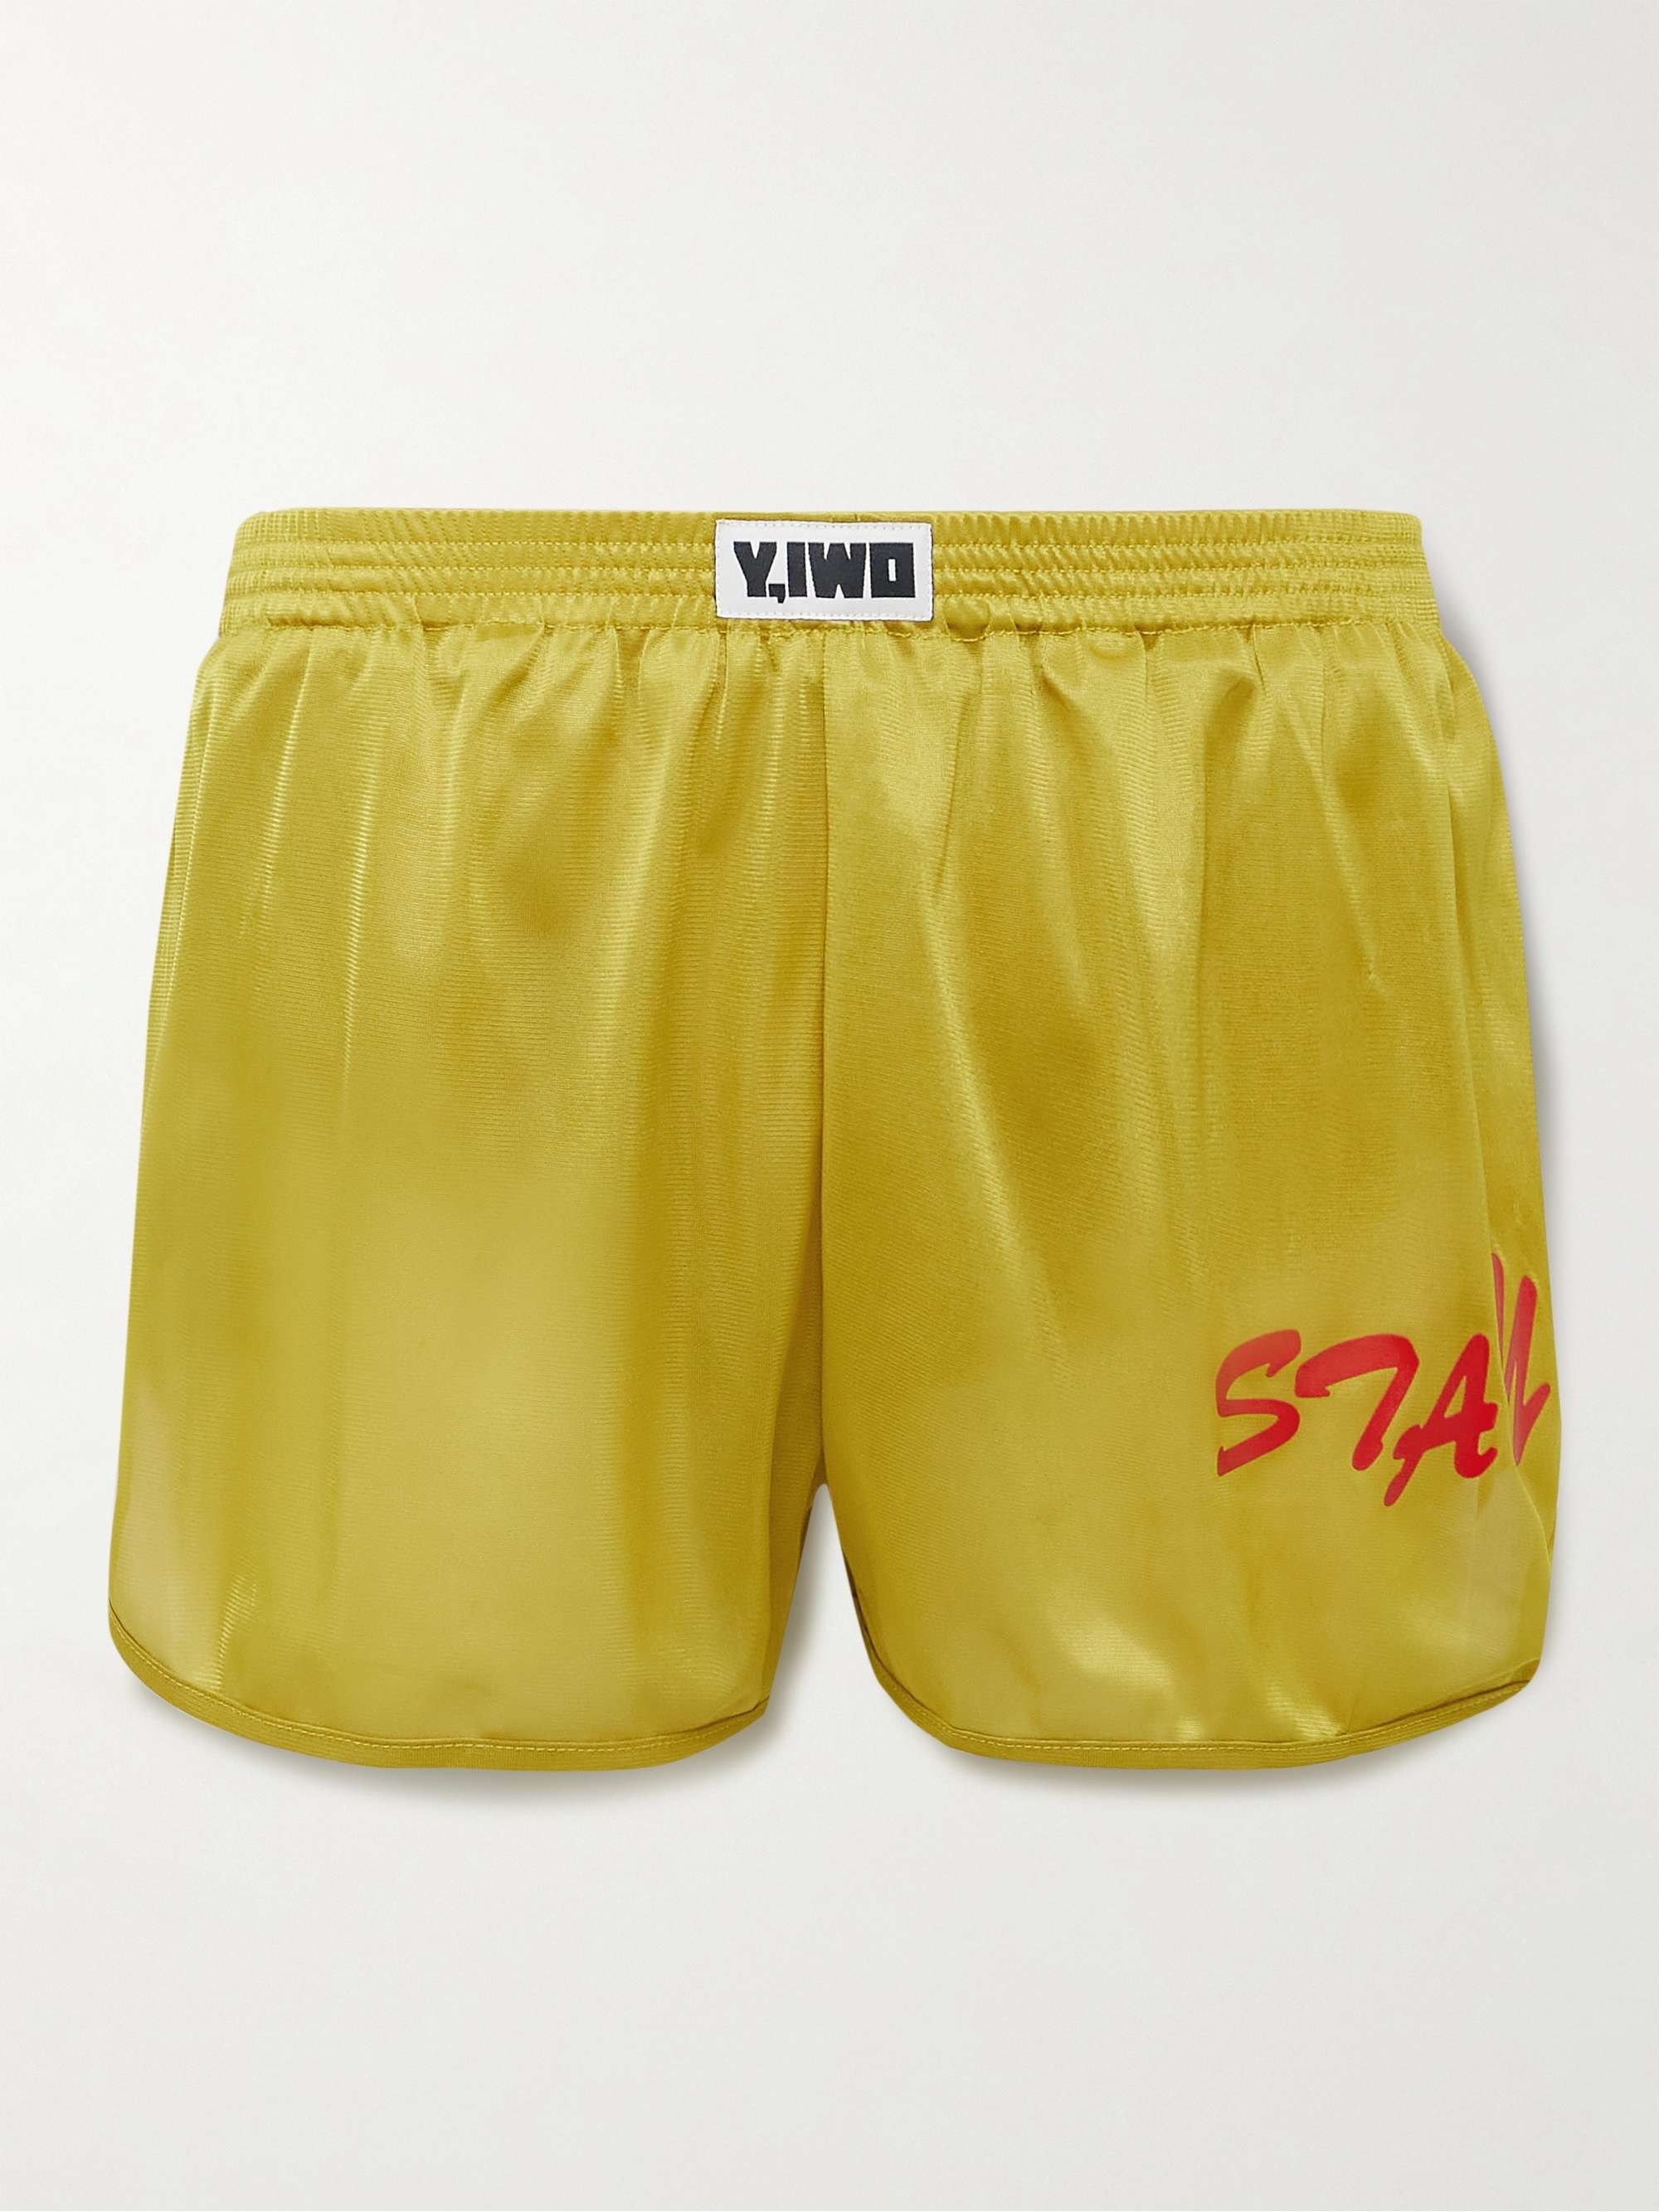 Y,IWO Slim-Fit Printed Jersey Shorts